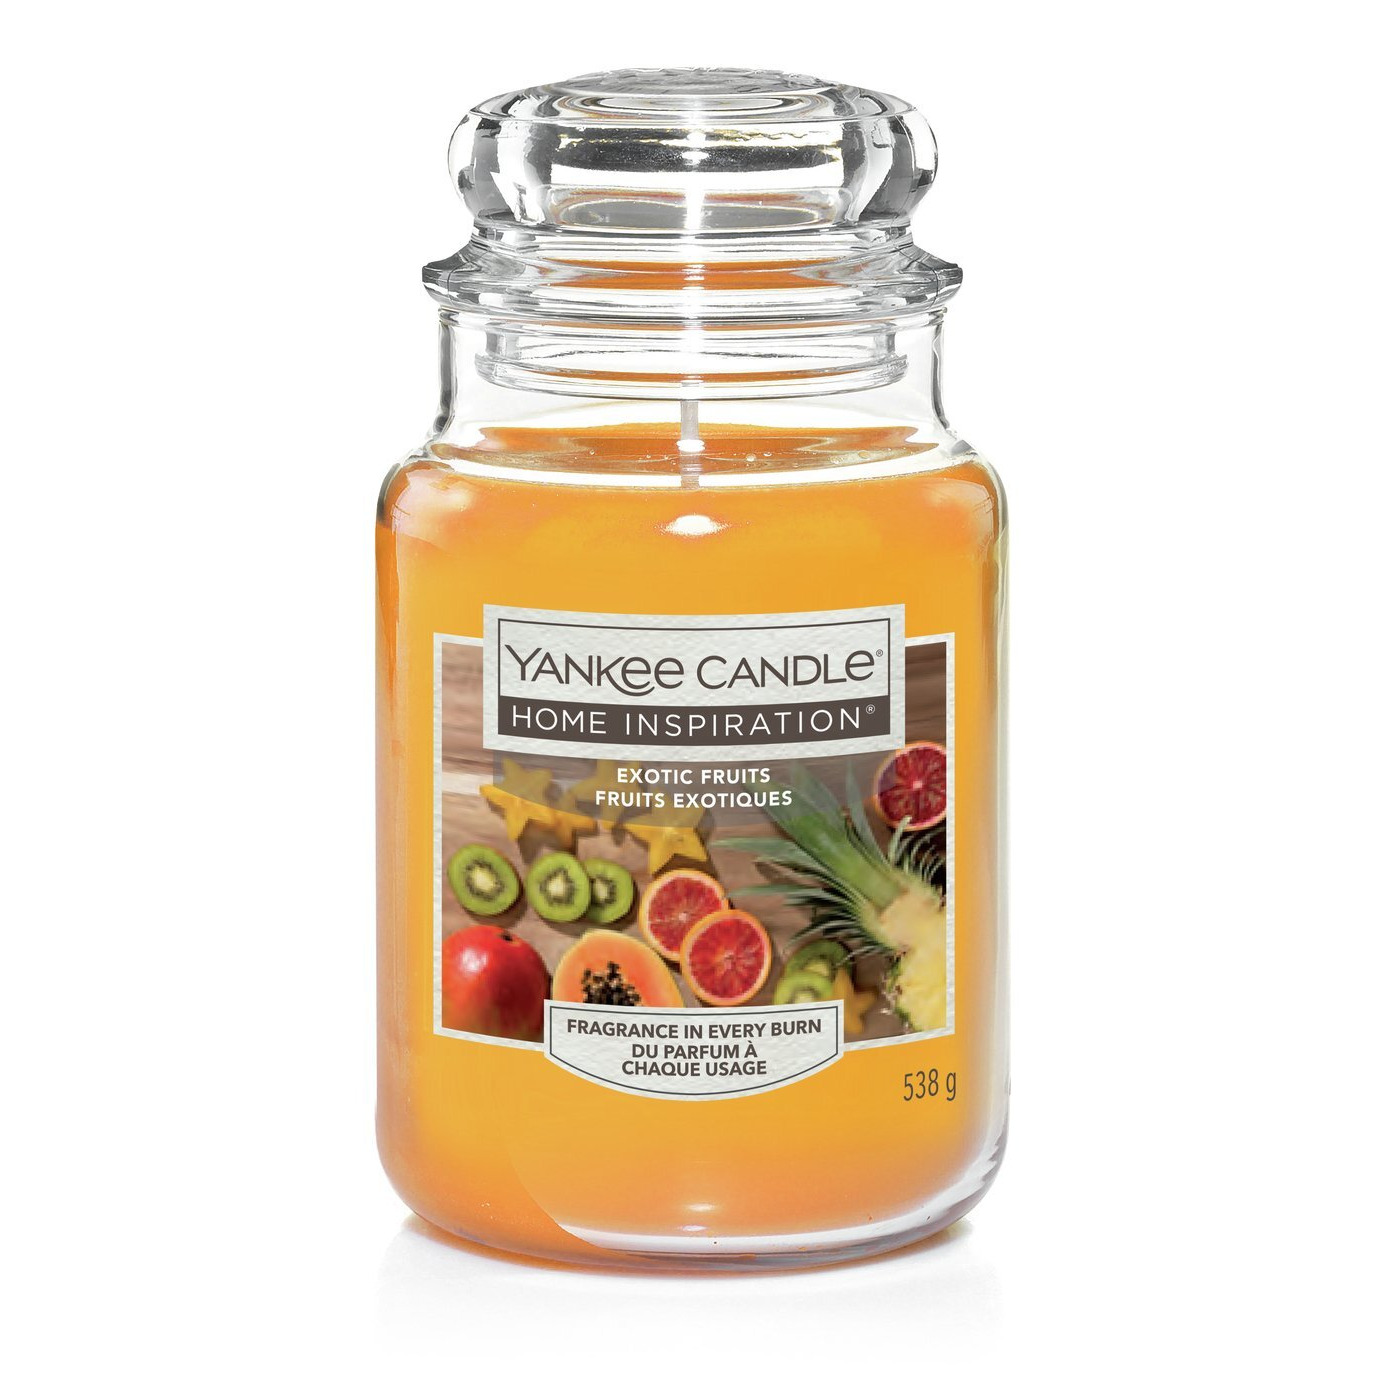 Yankee Home Inspiration Large Jar Candle - Exotic Fruits - image 1